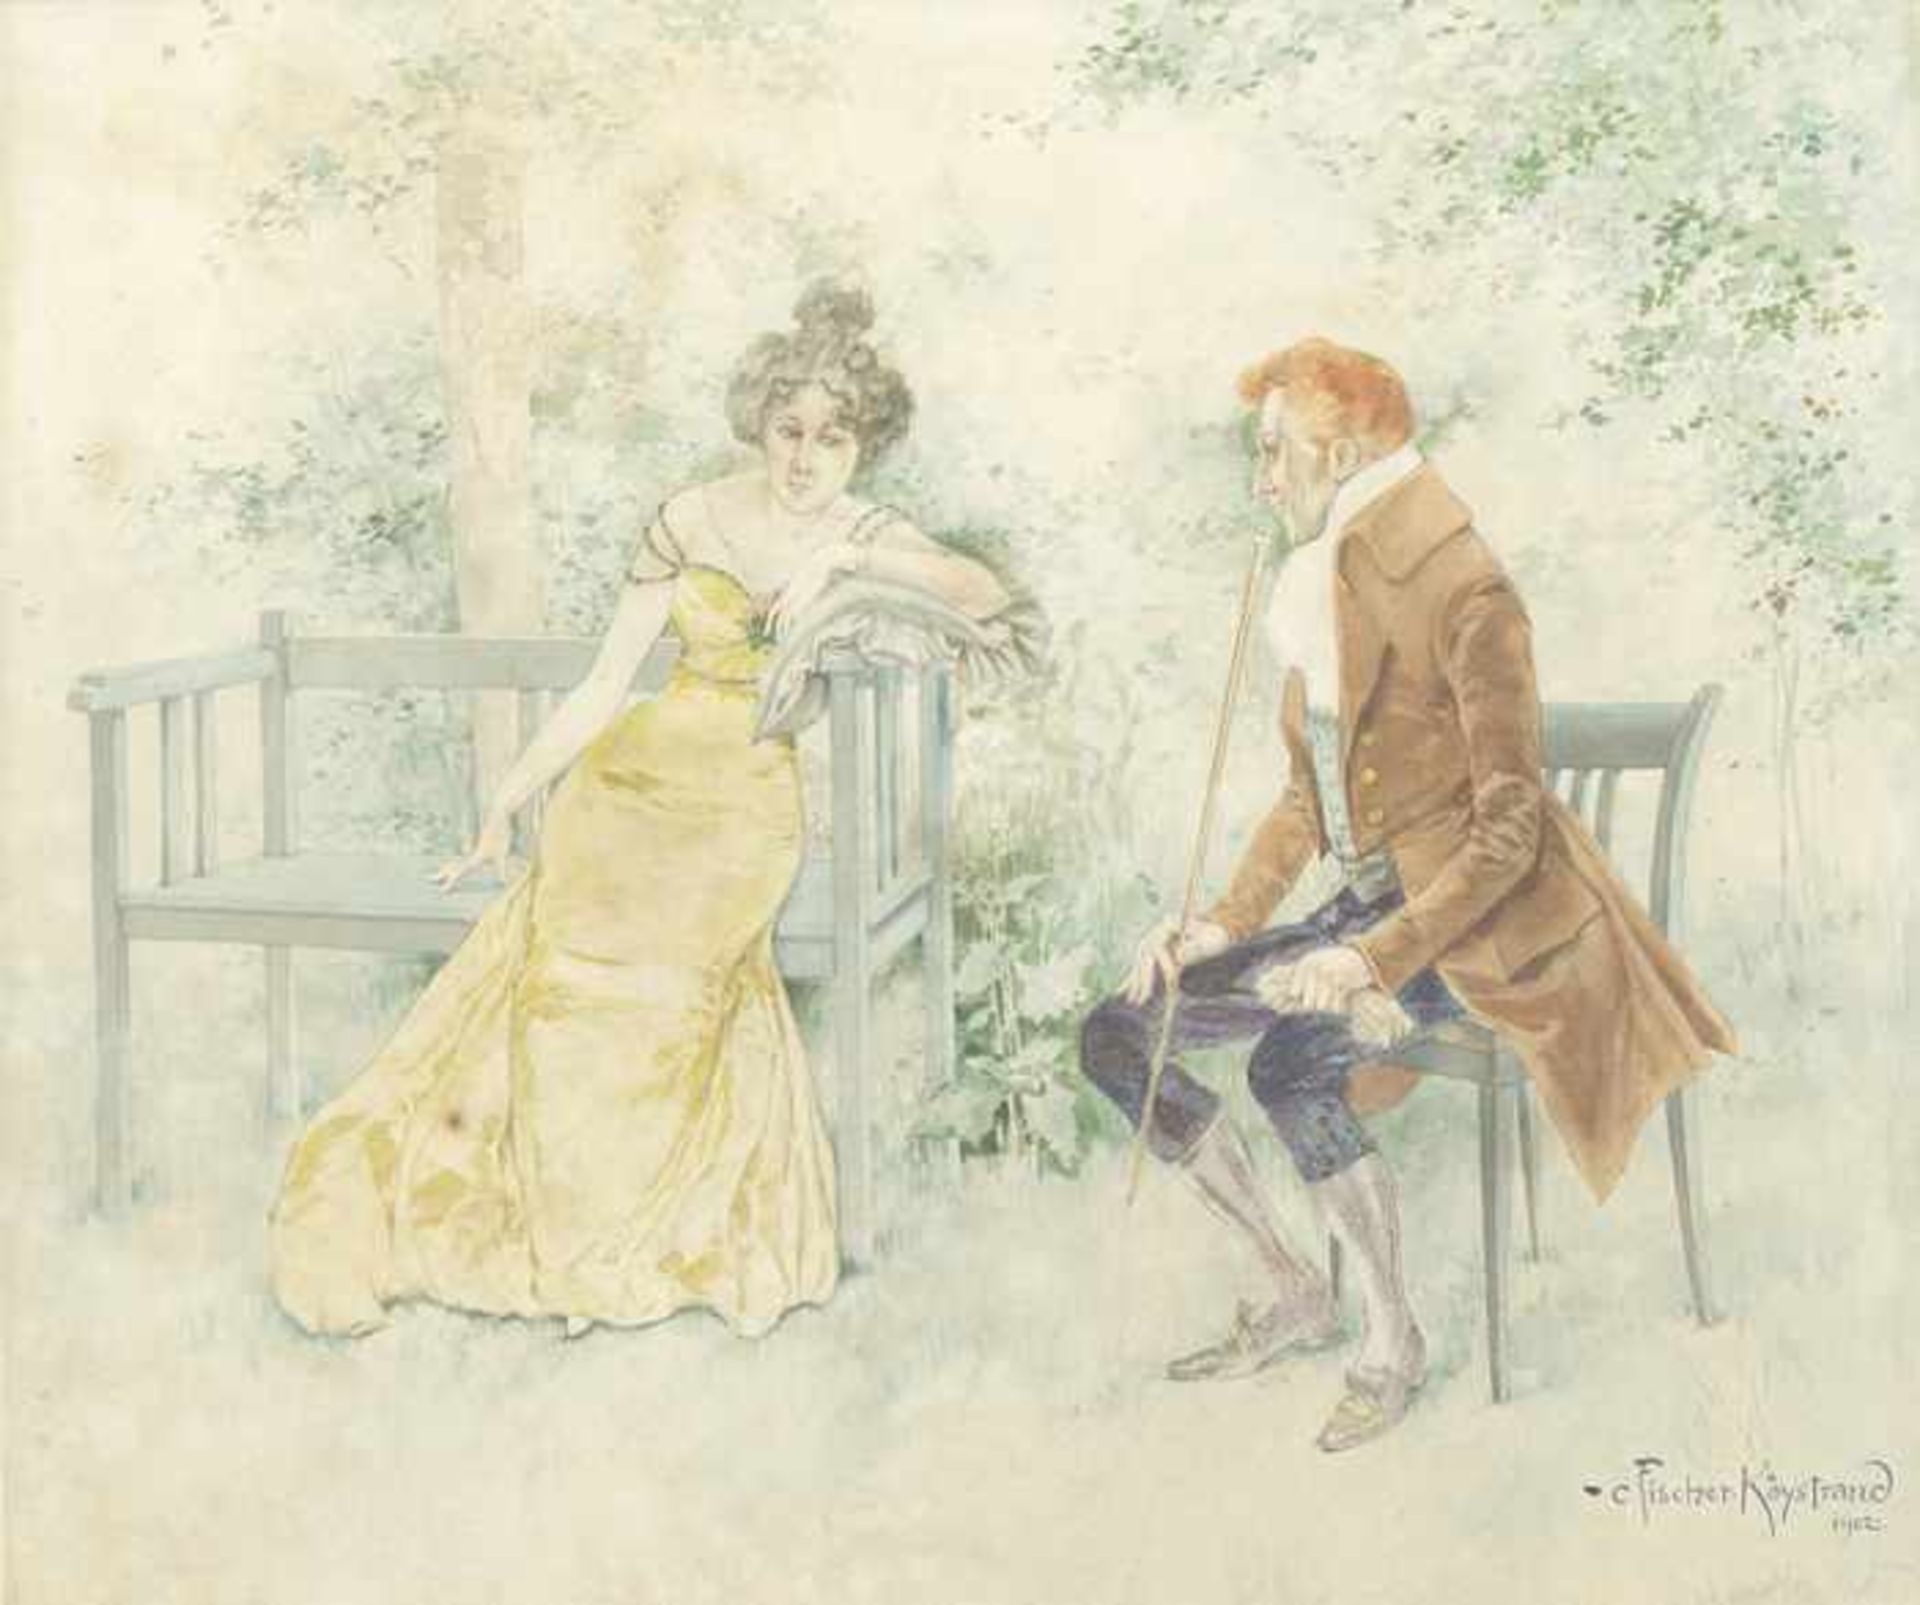 Fischer-Köystrand, Carl Elegantes Paar, 1902 Gouache auf Papier Signiert und datiert rechts unten 26